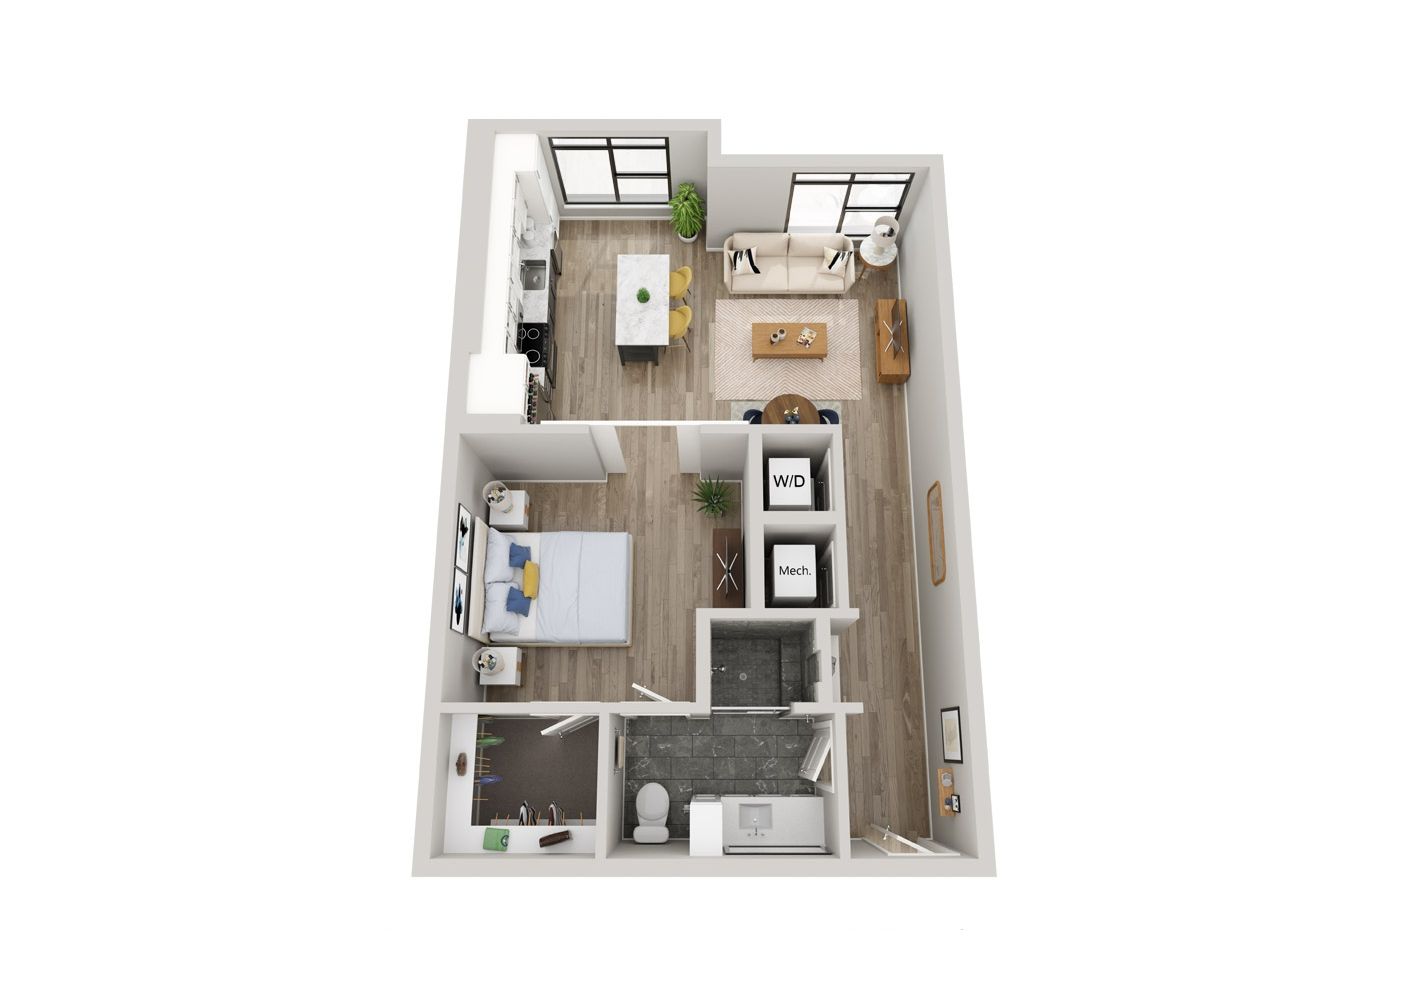 floorplan layout of Chantilly apartment